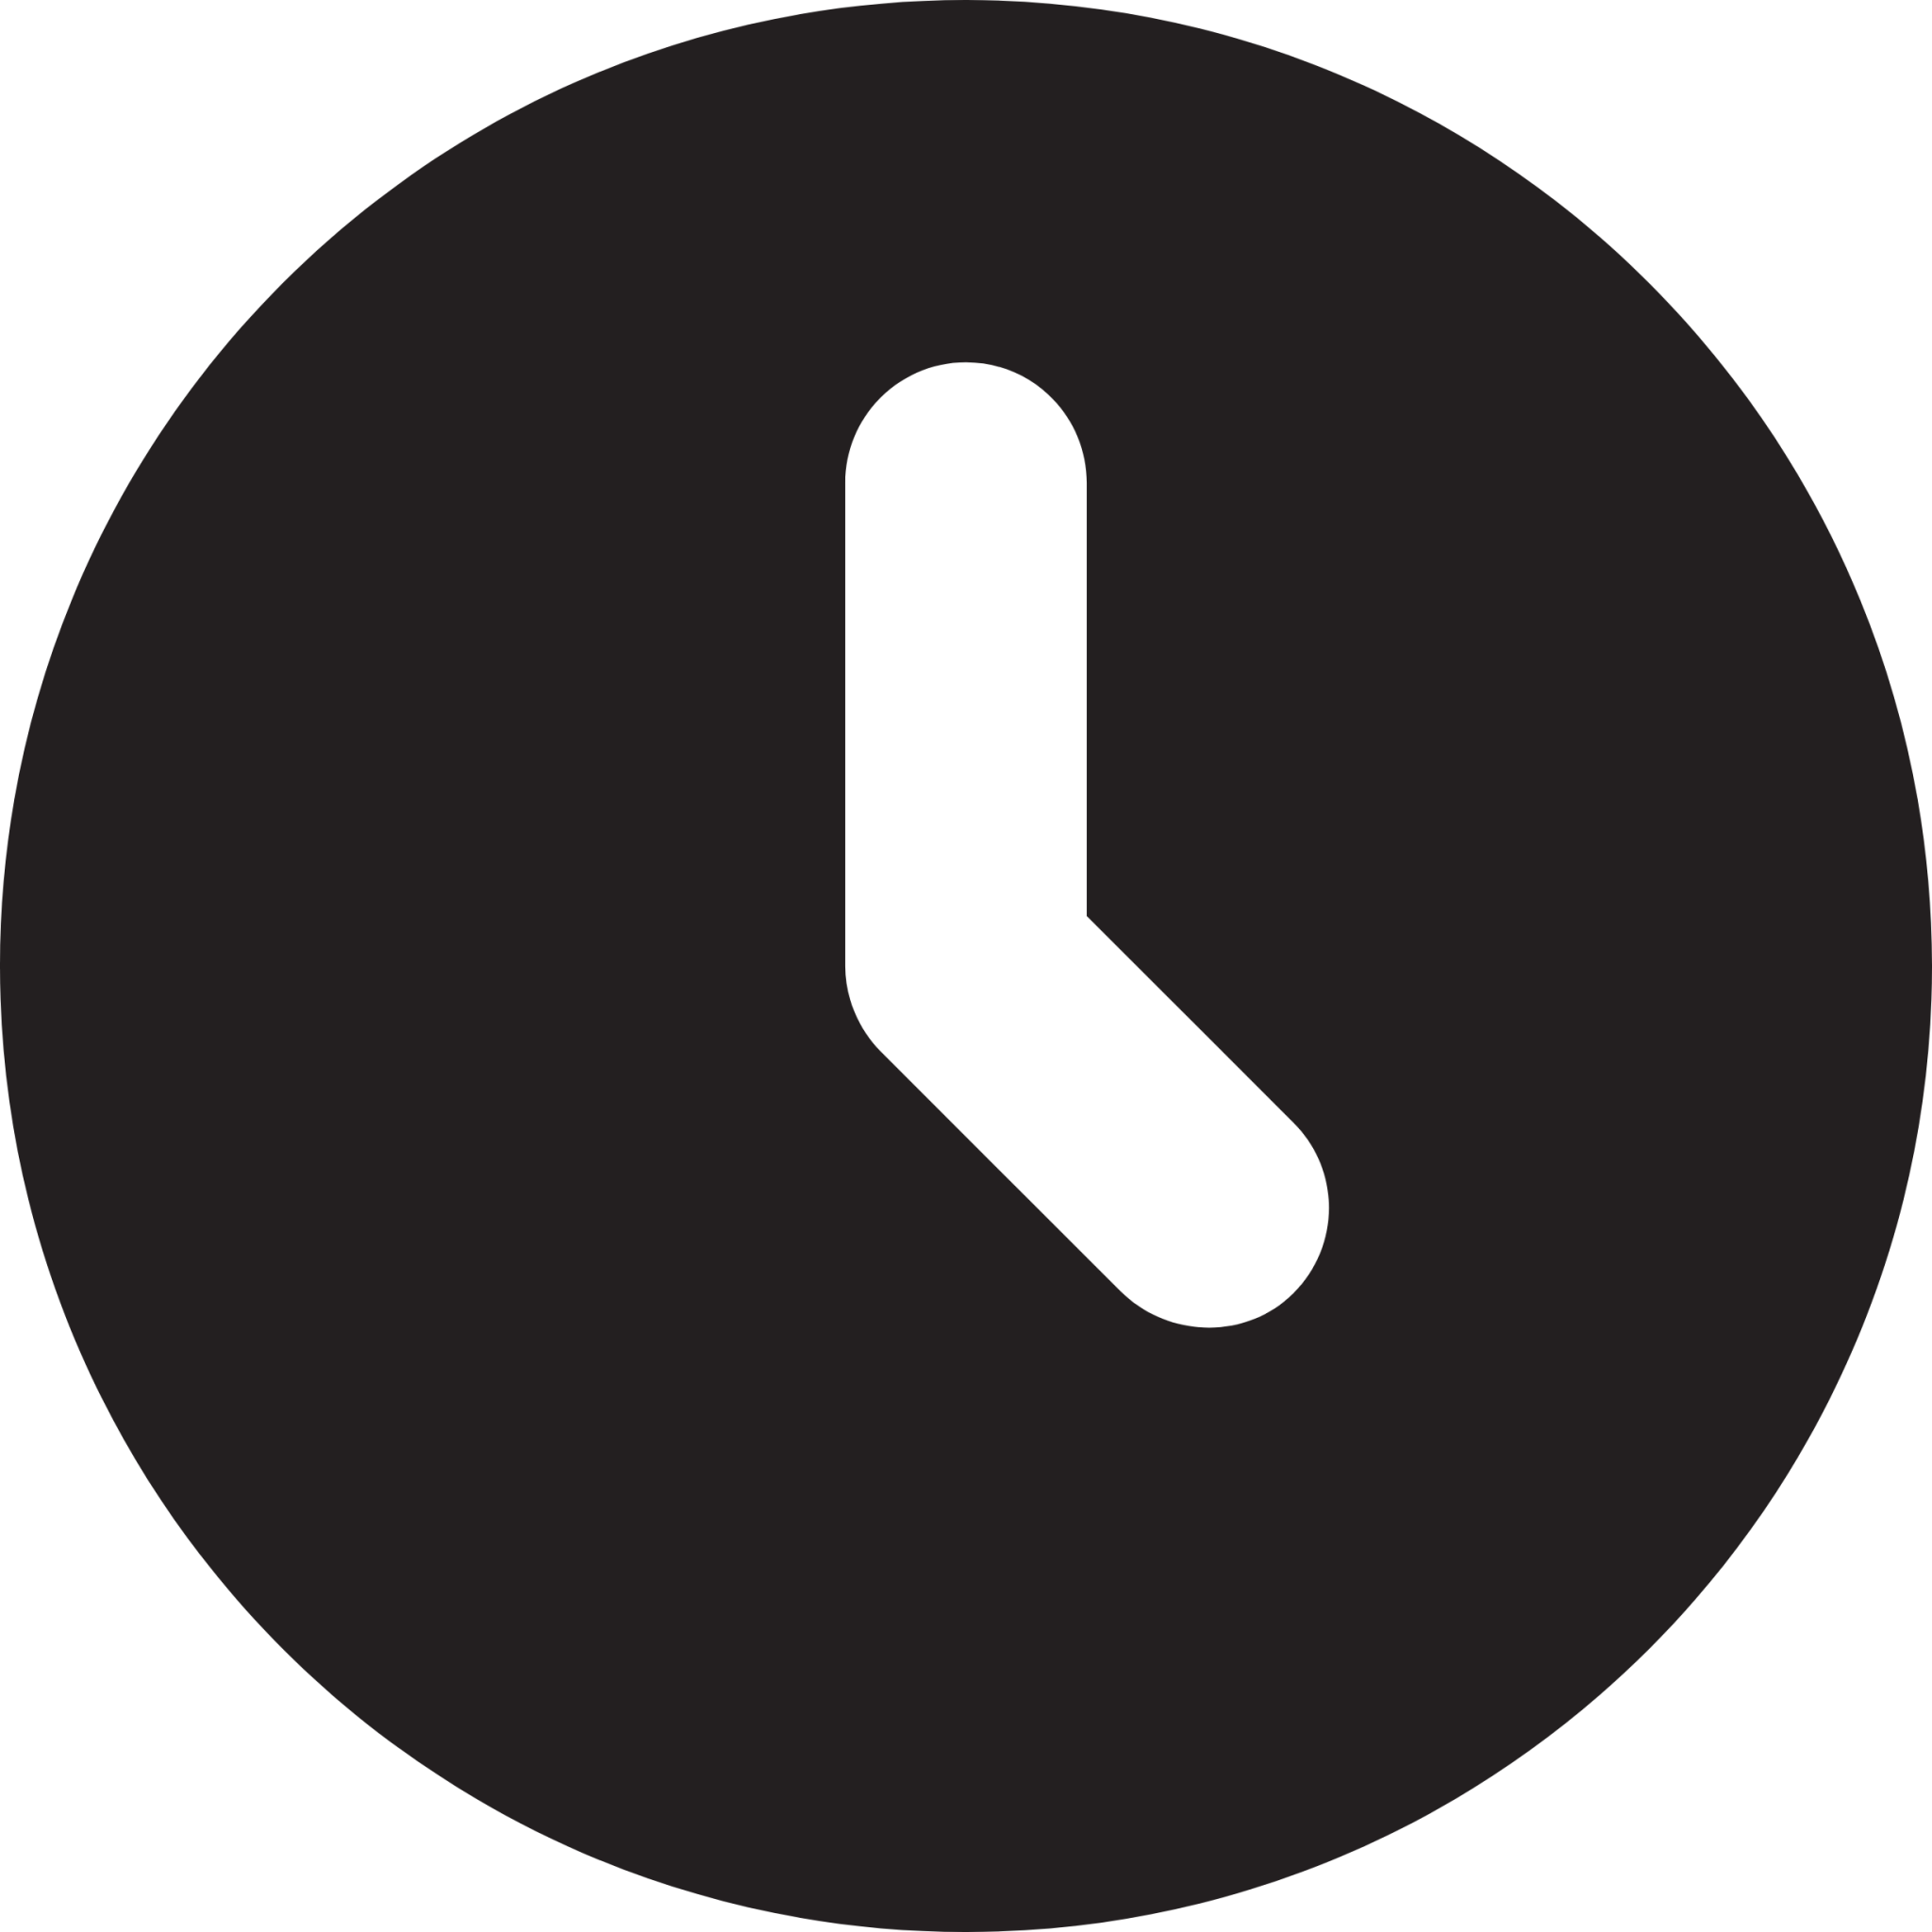 timer clock Emoji - Download for free – Iconduck